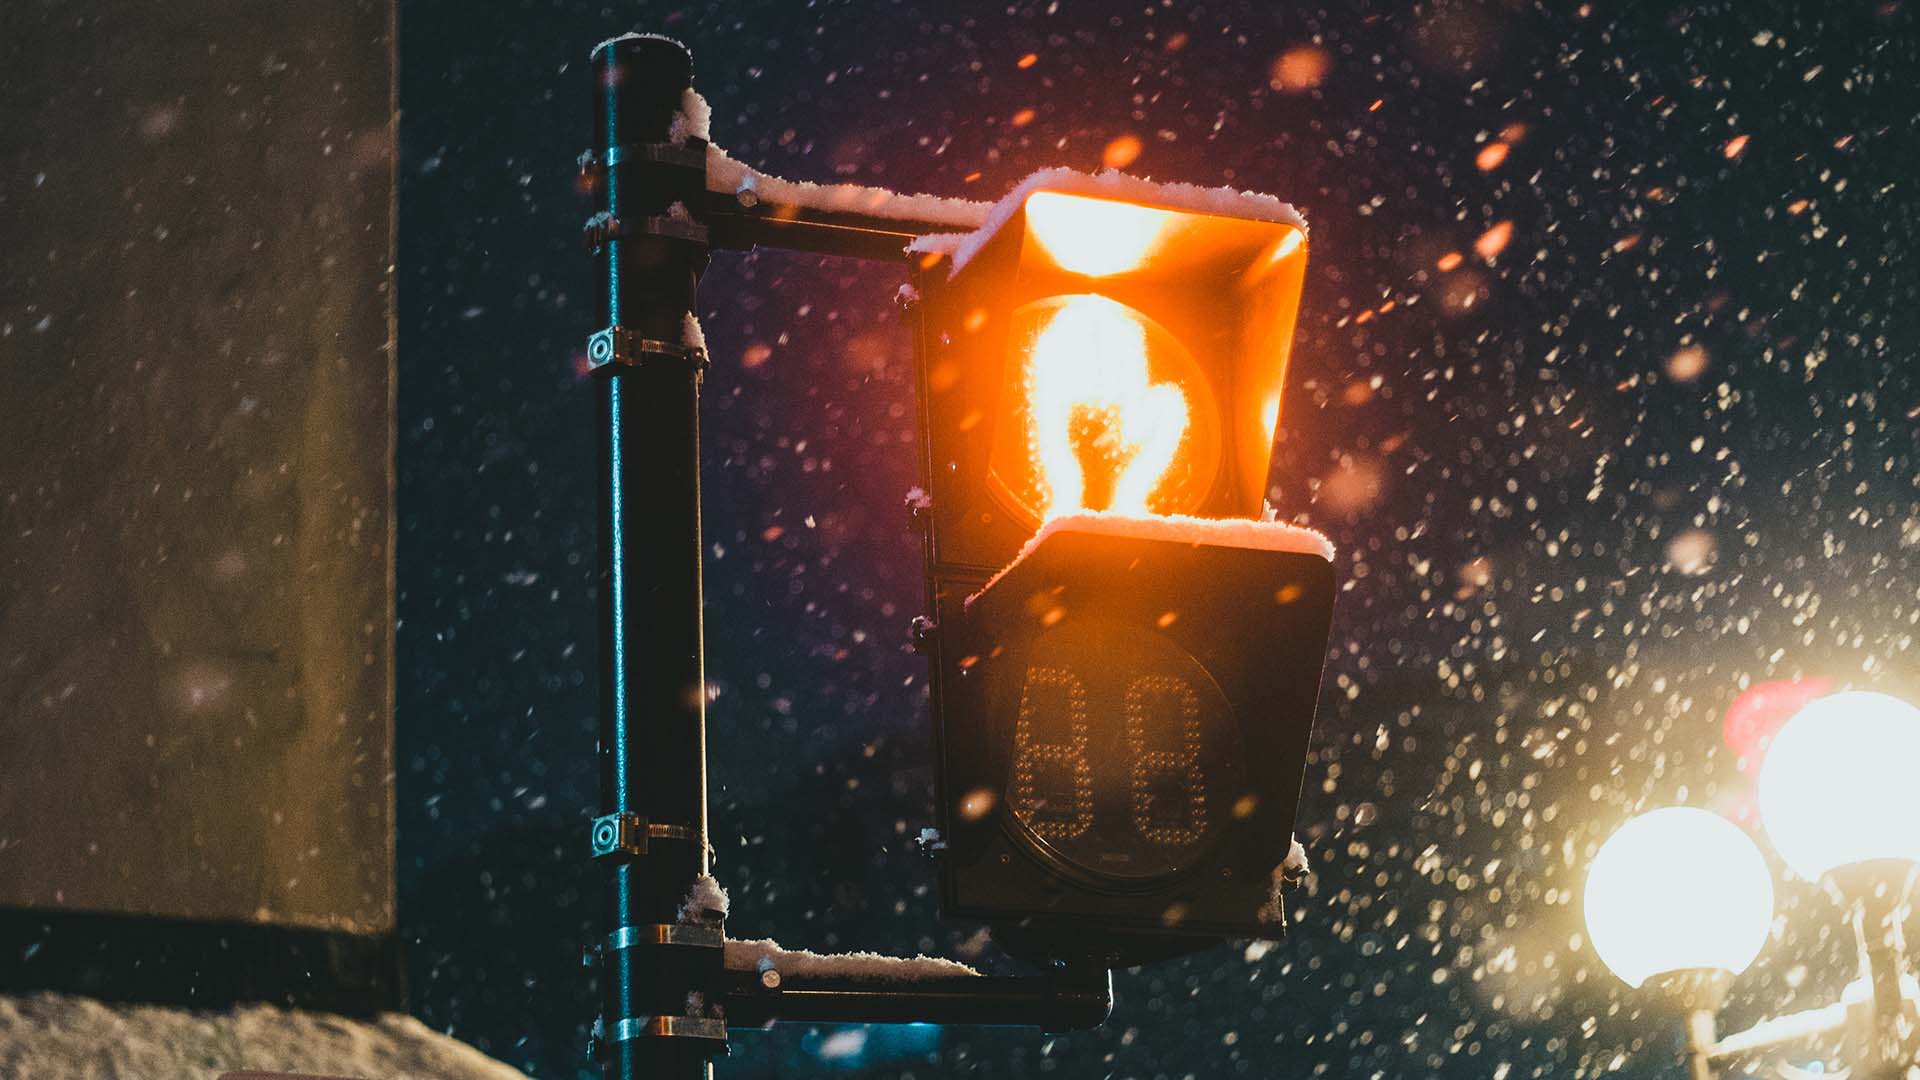 Red hand crosswalk light in a snowy night